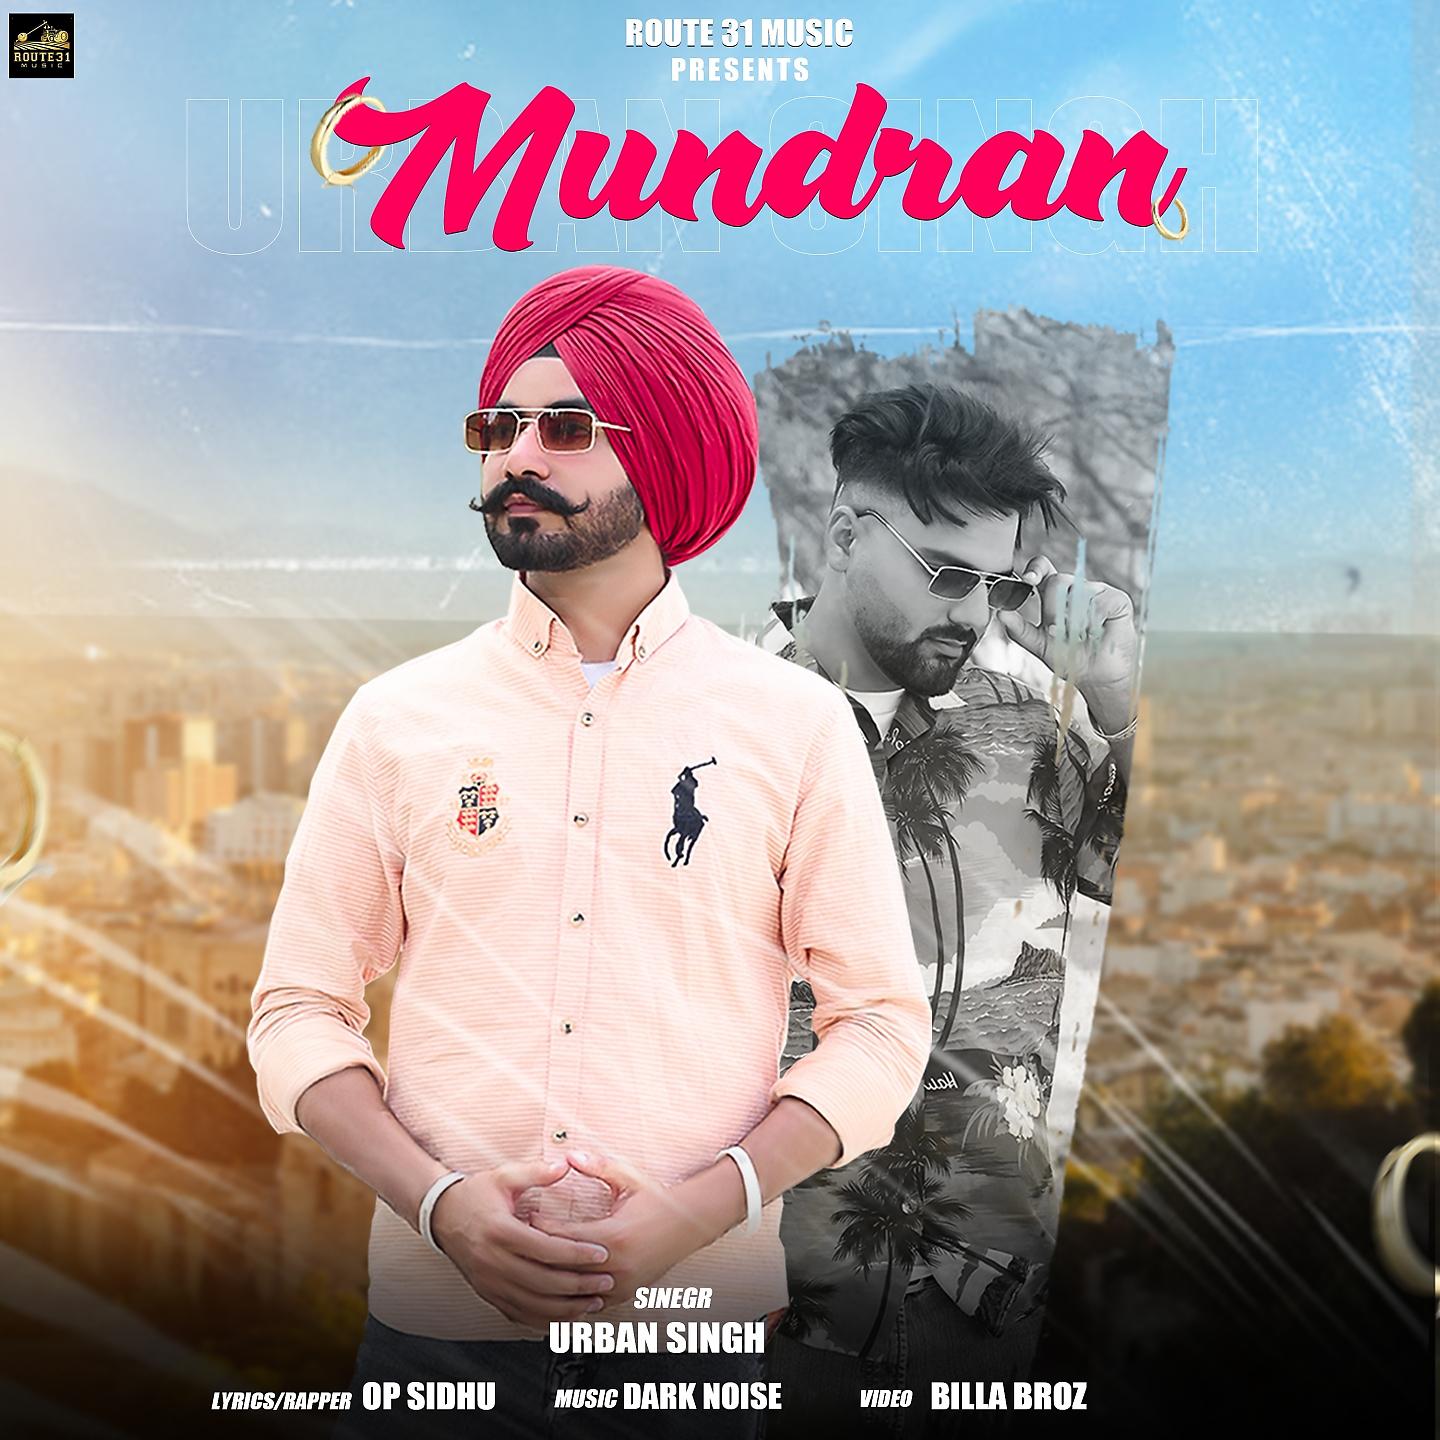 Постер альбома Mundran